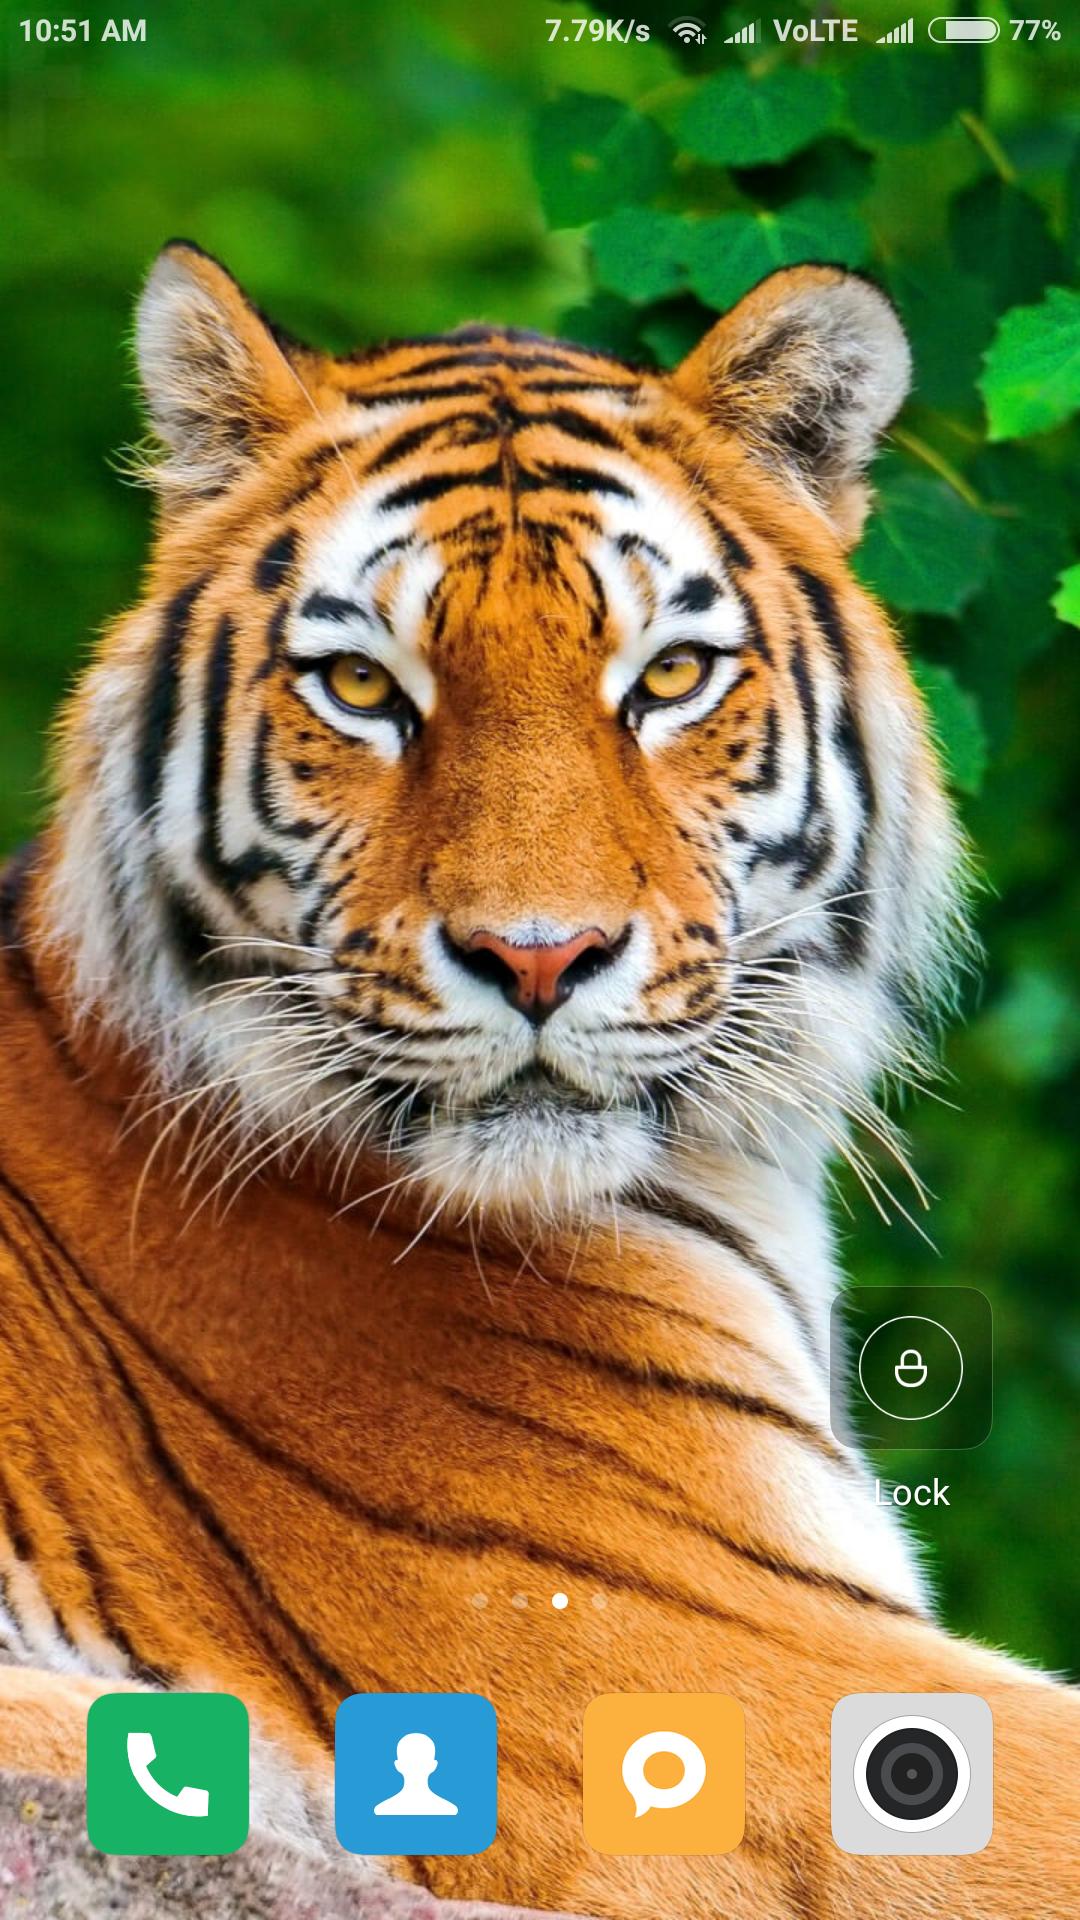 35 Gambar Wallpaper Hd Android Tiger terbaru 2020